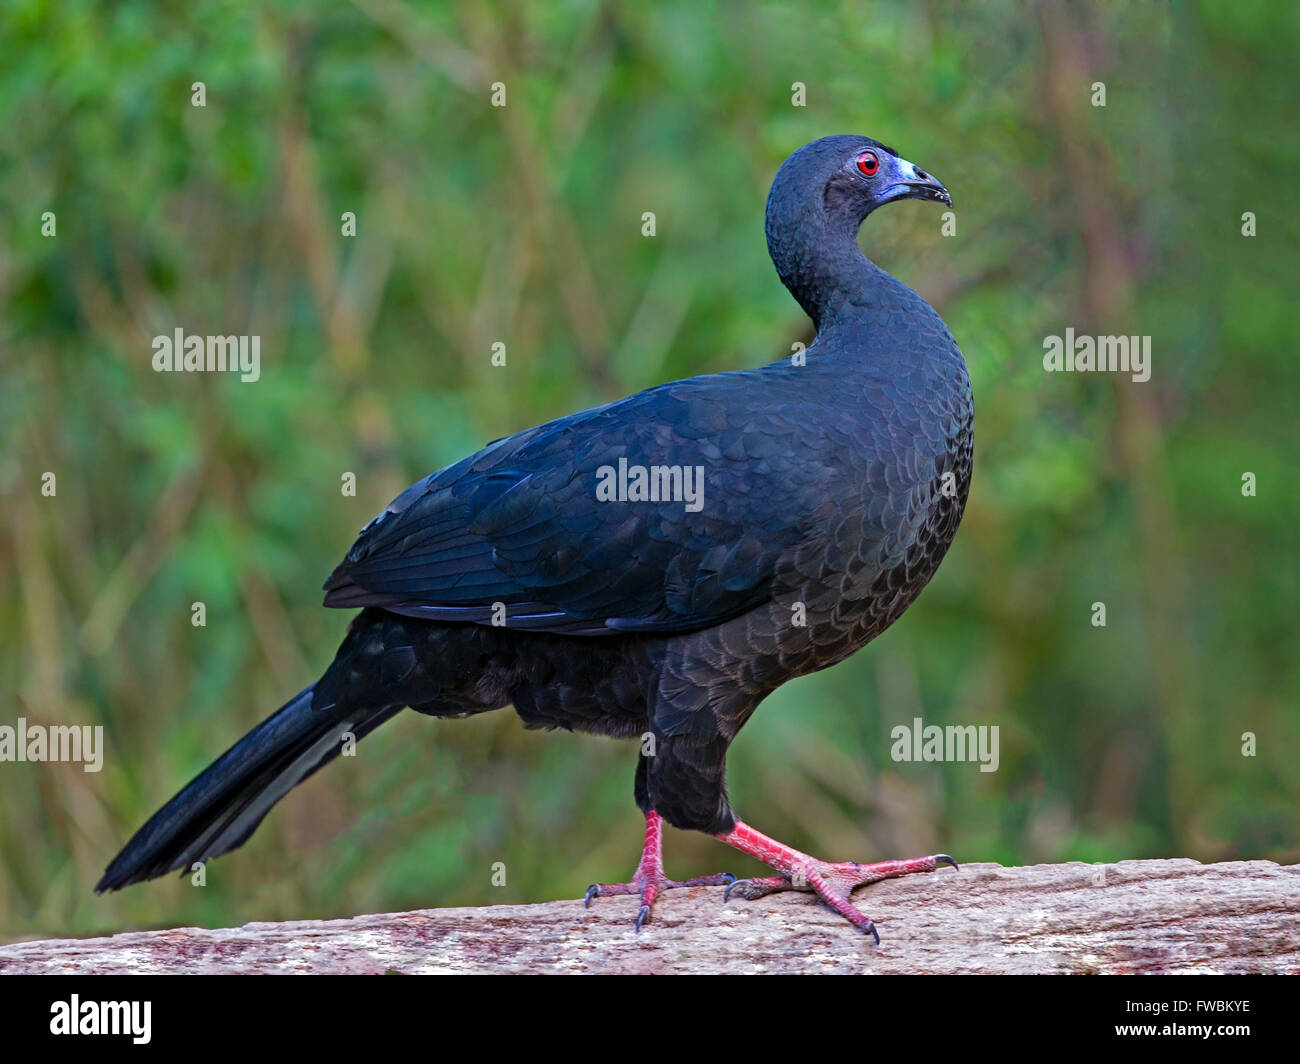 Black guan standing Stock Photo